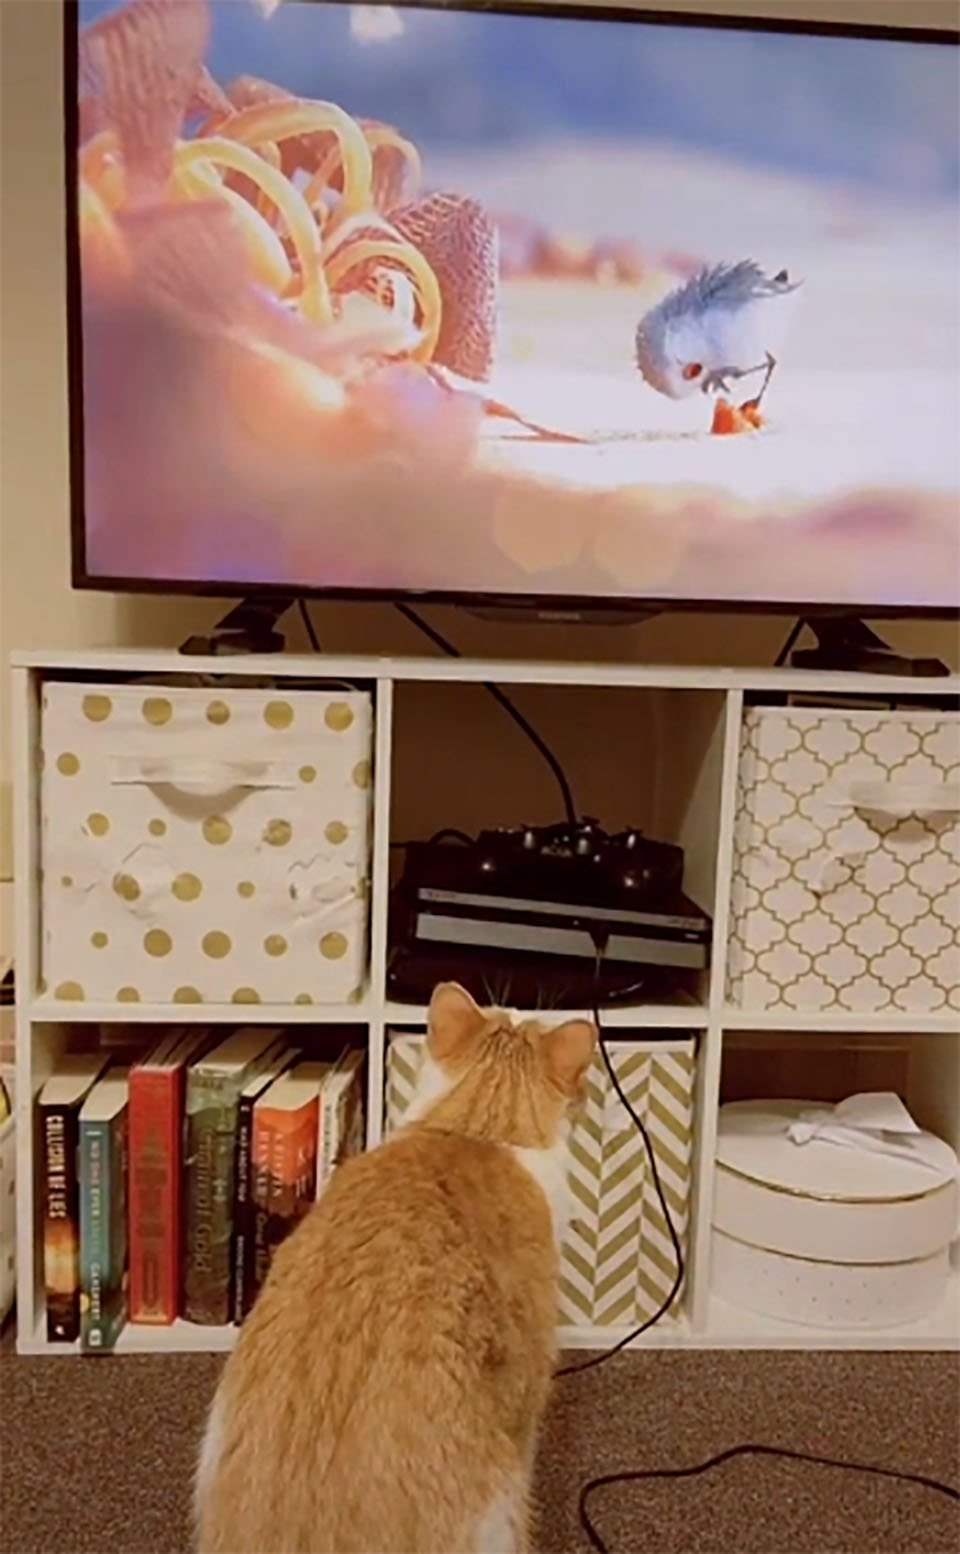 Gato mirando tv